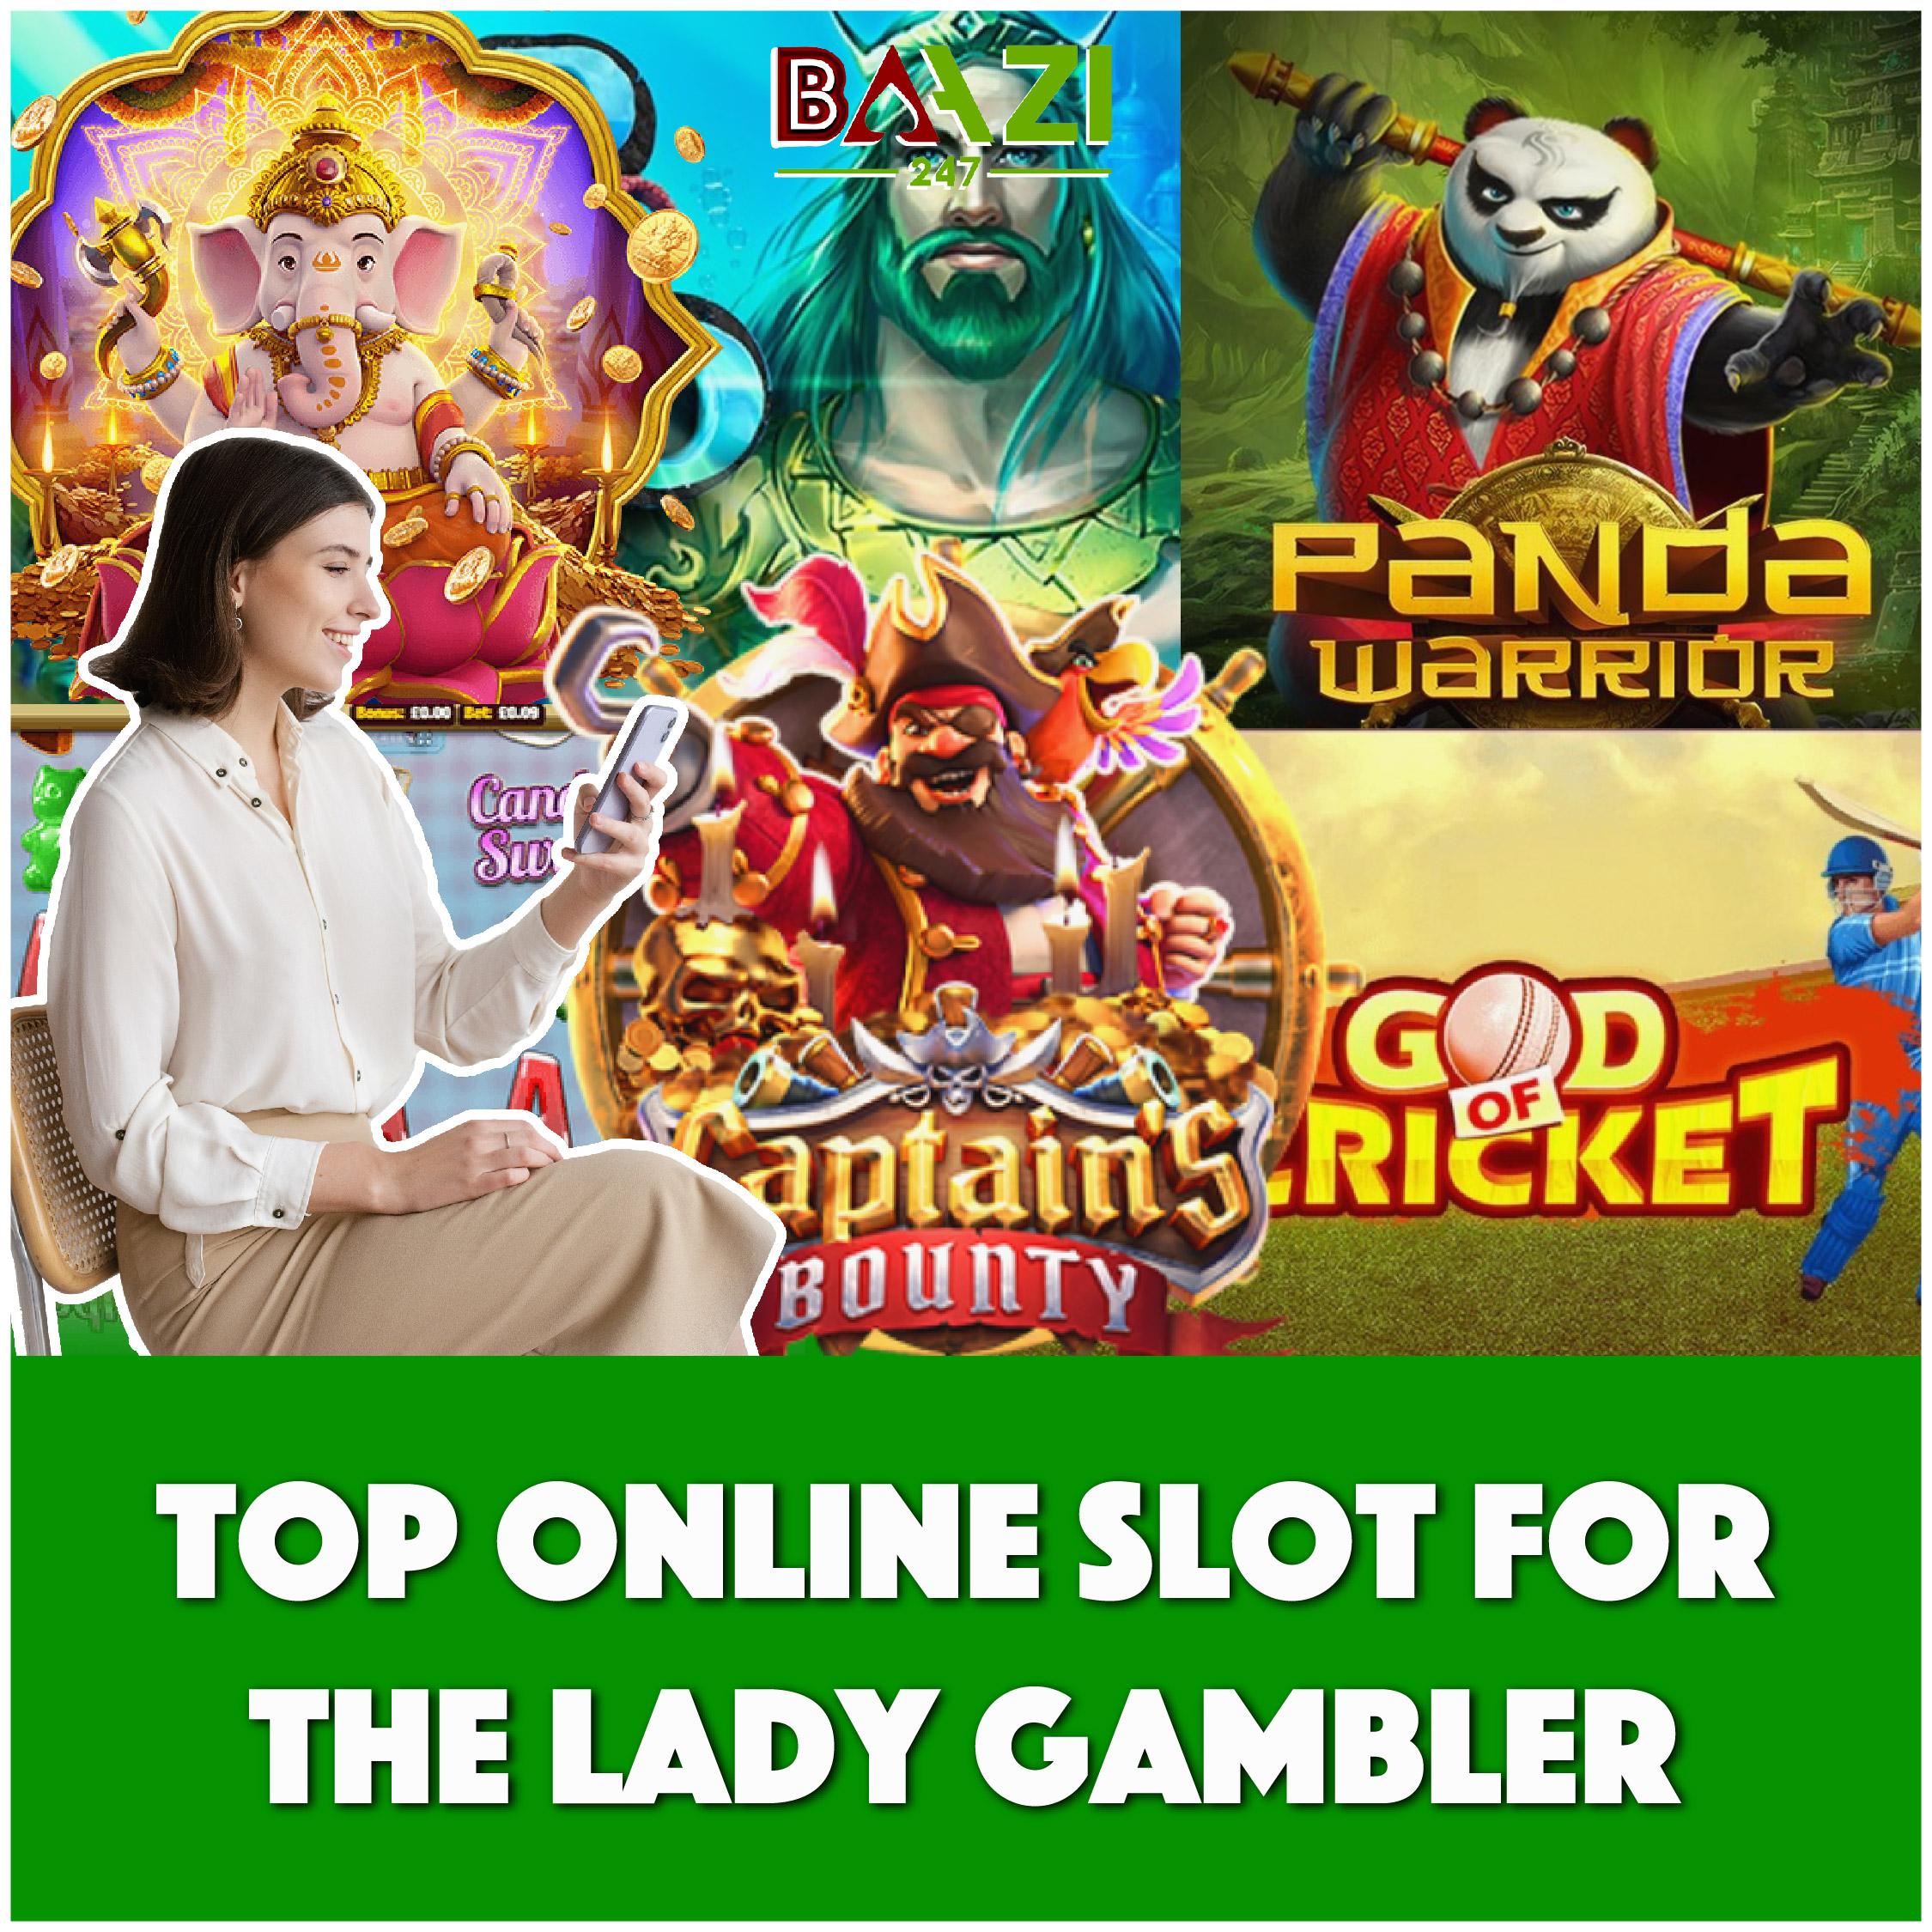 Top Online Slot For Lady Gambler